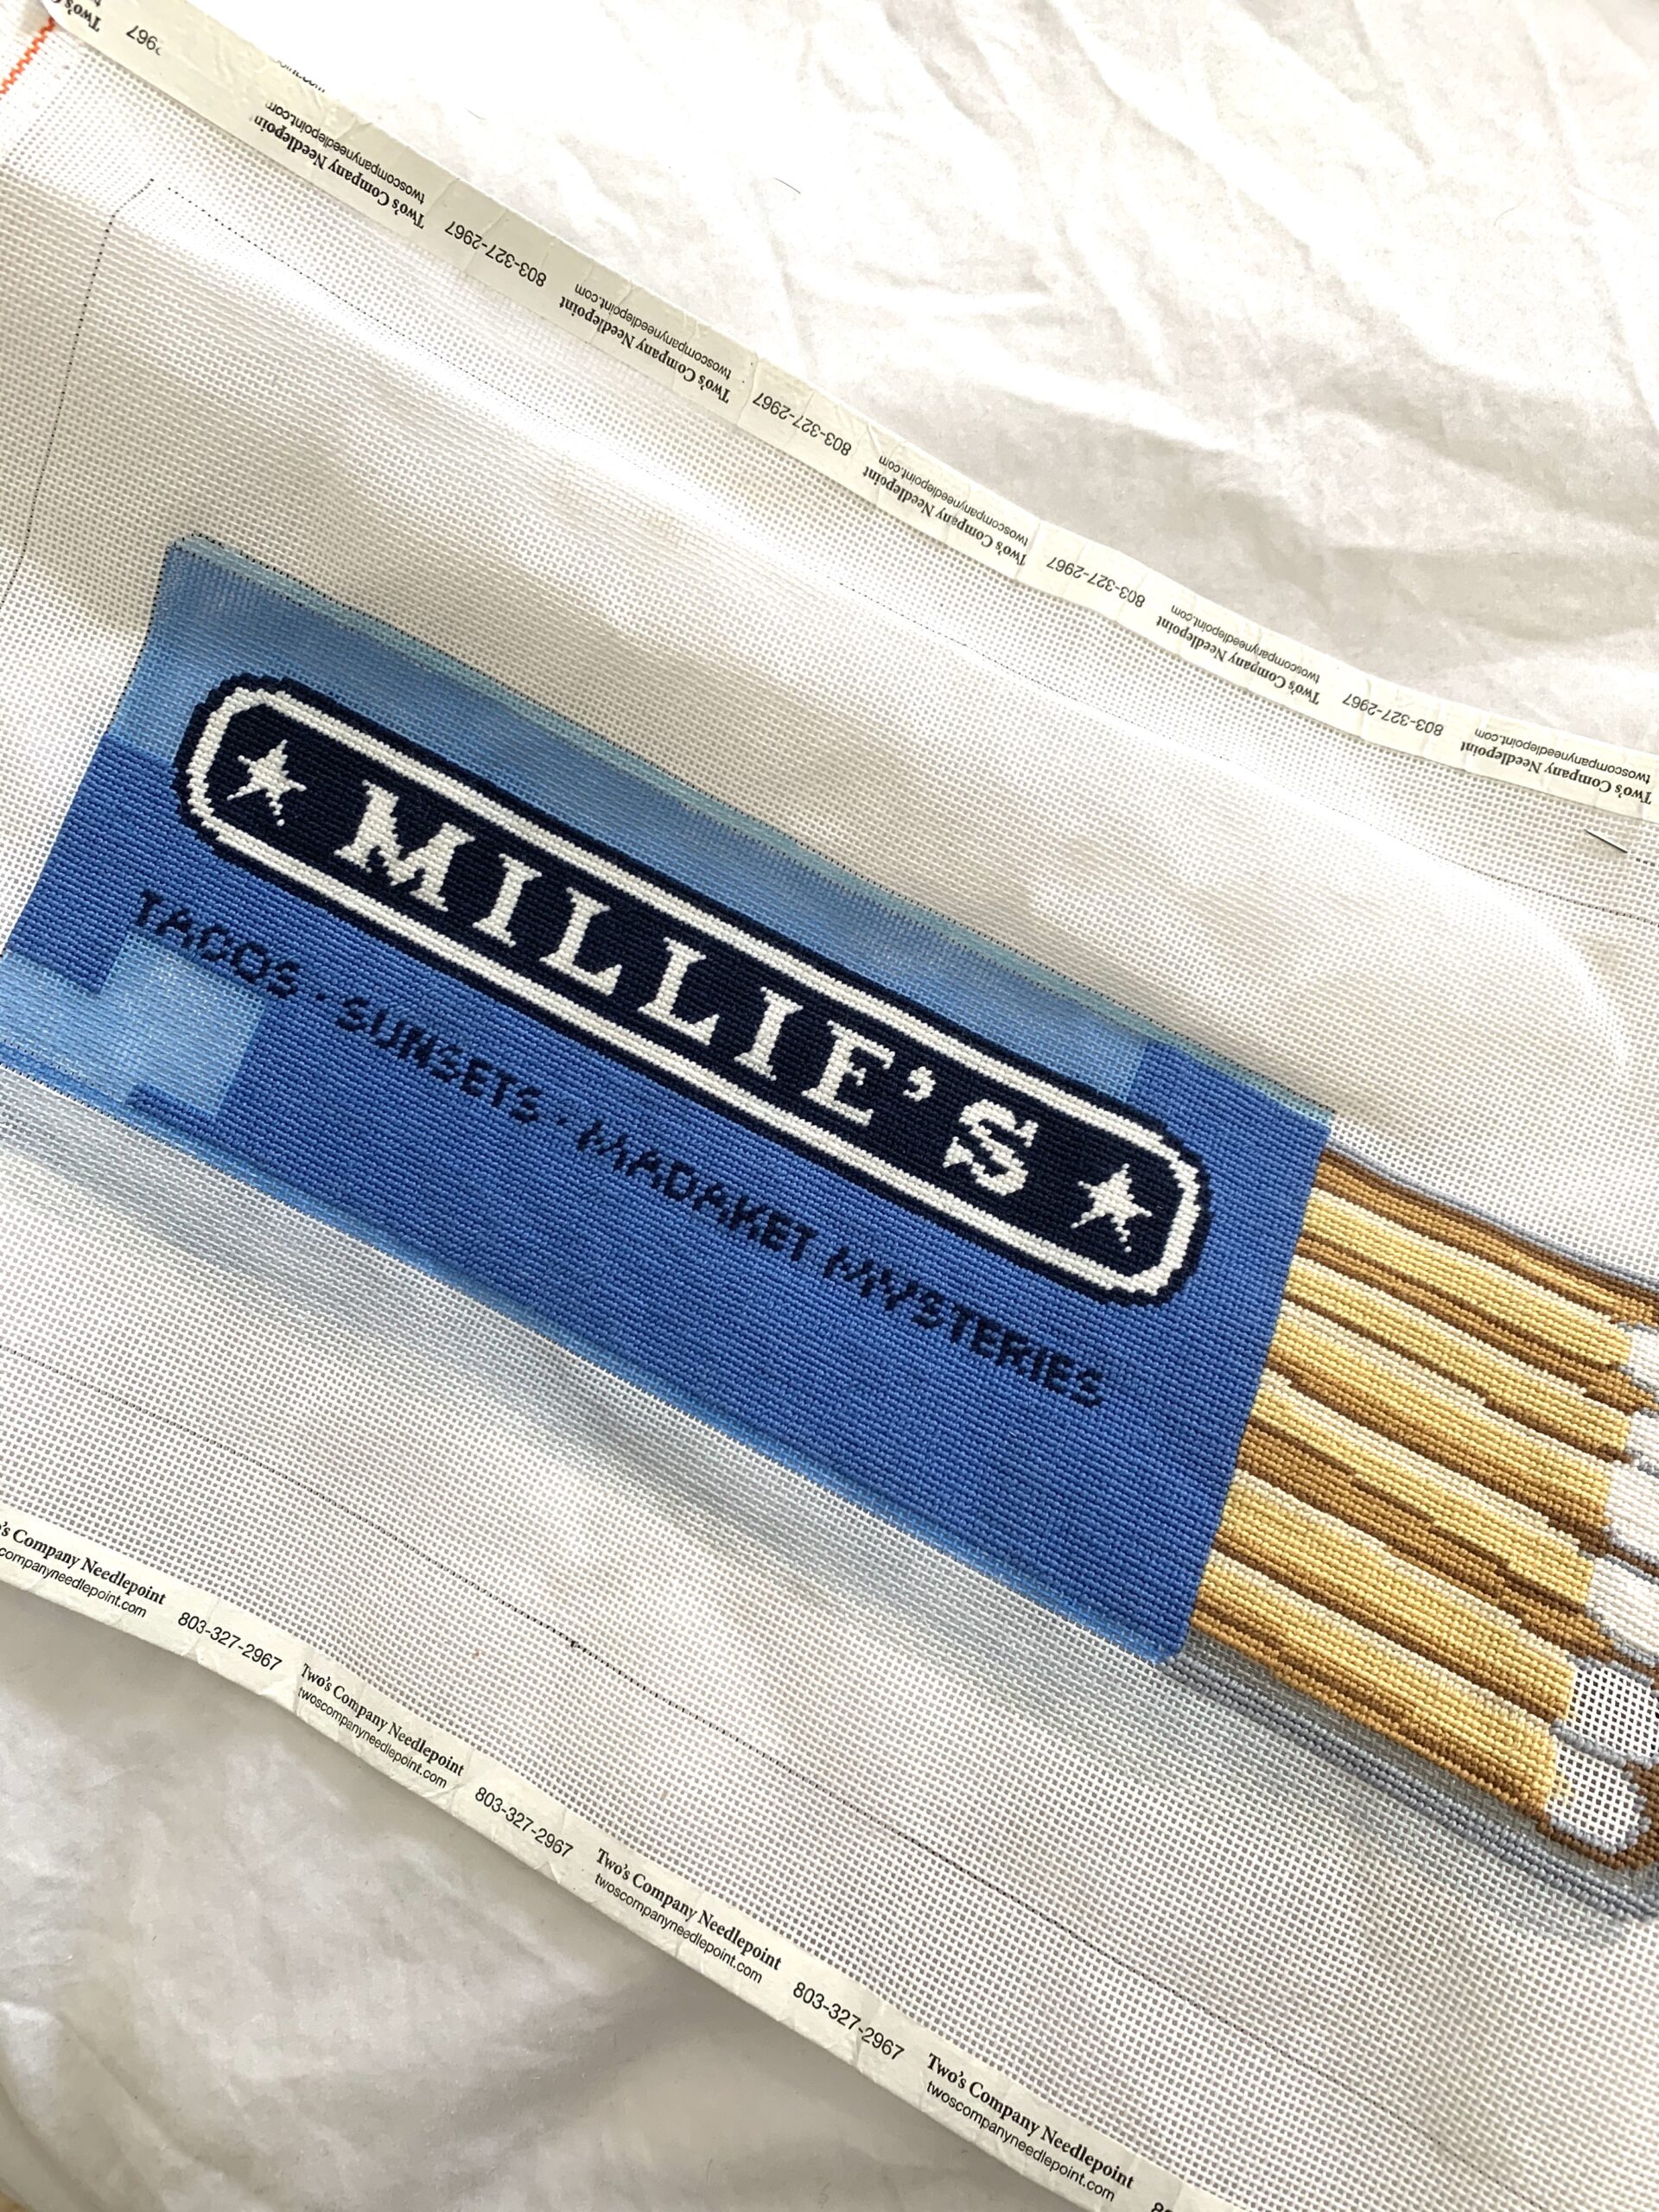 millie's nantucket needlepoint canvas design darling